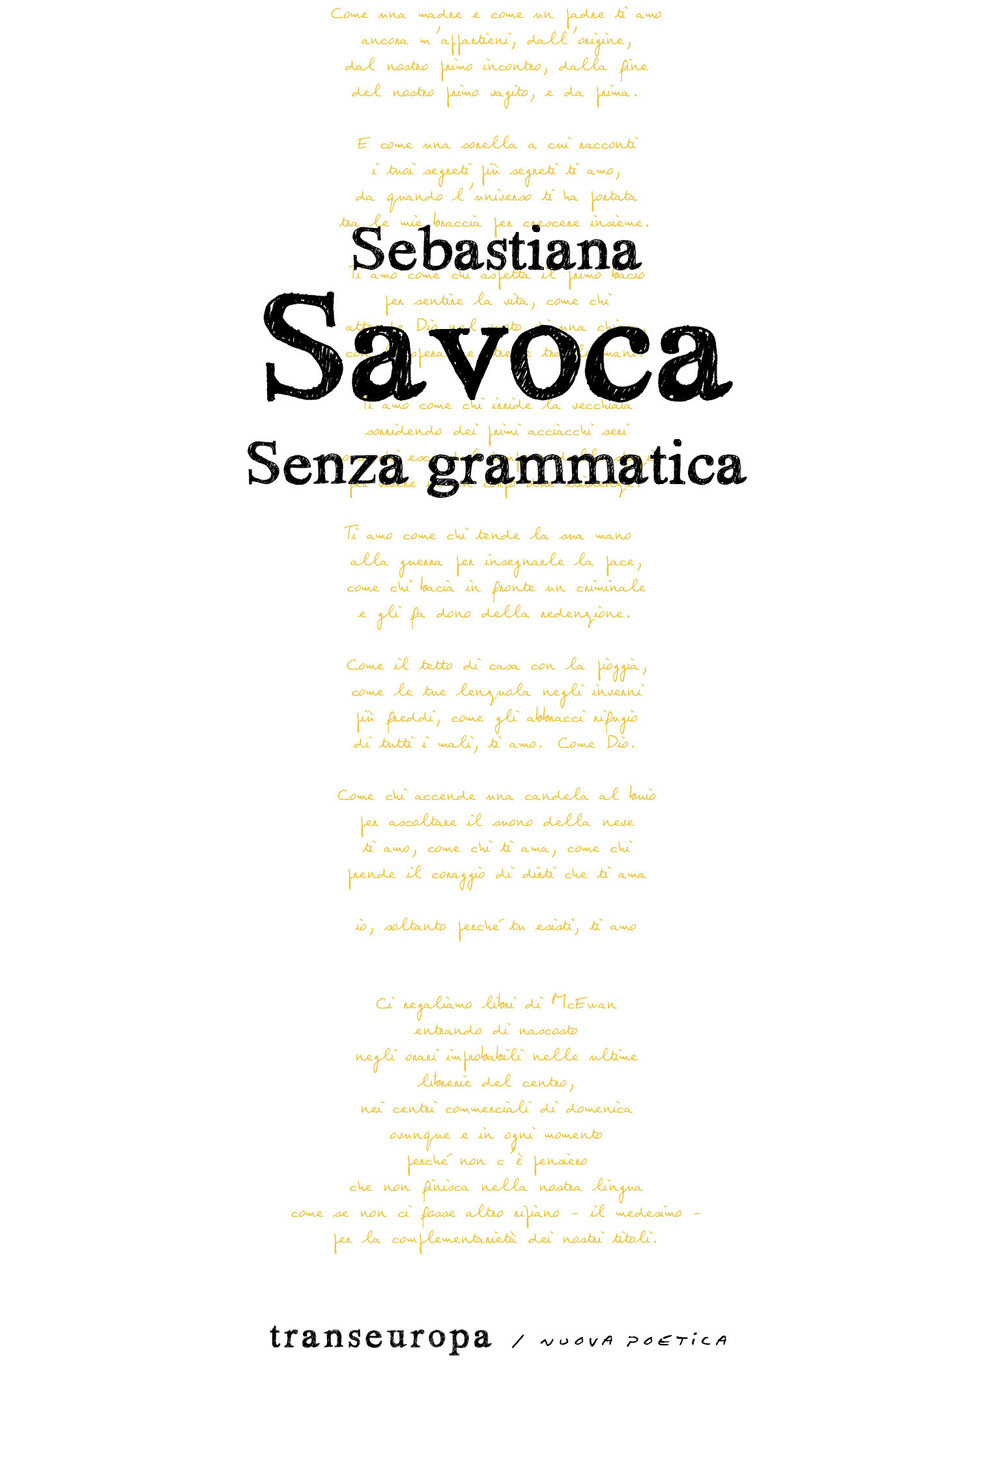 Image of Senza grammatica